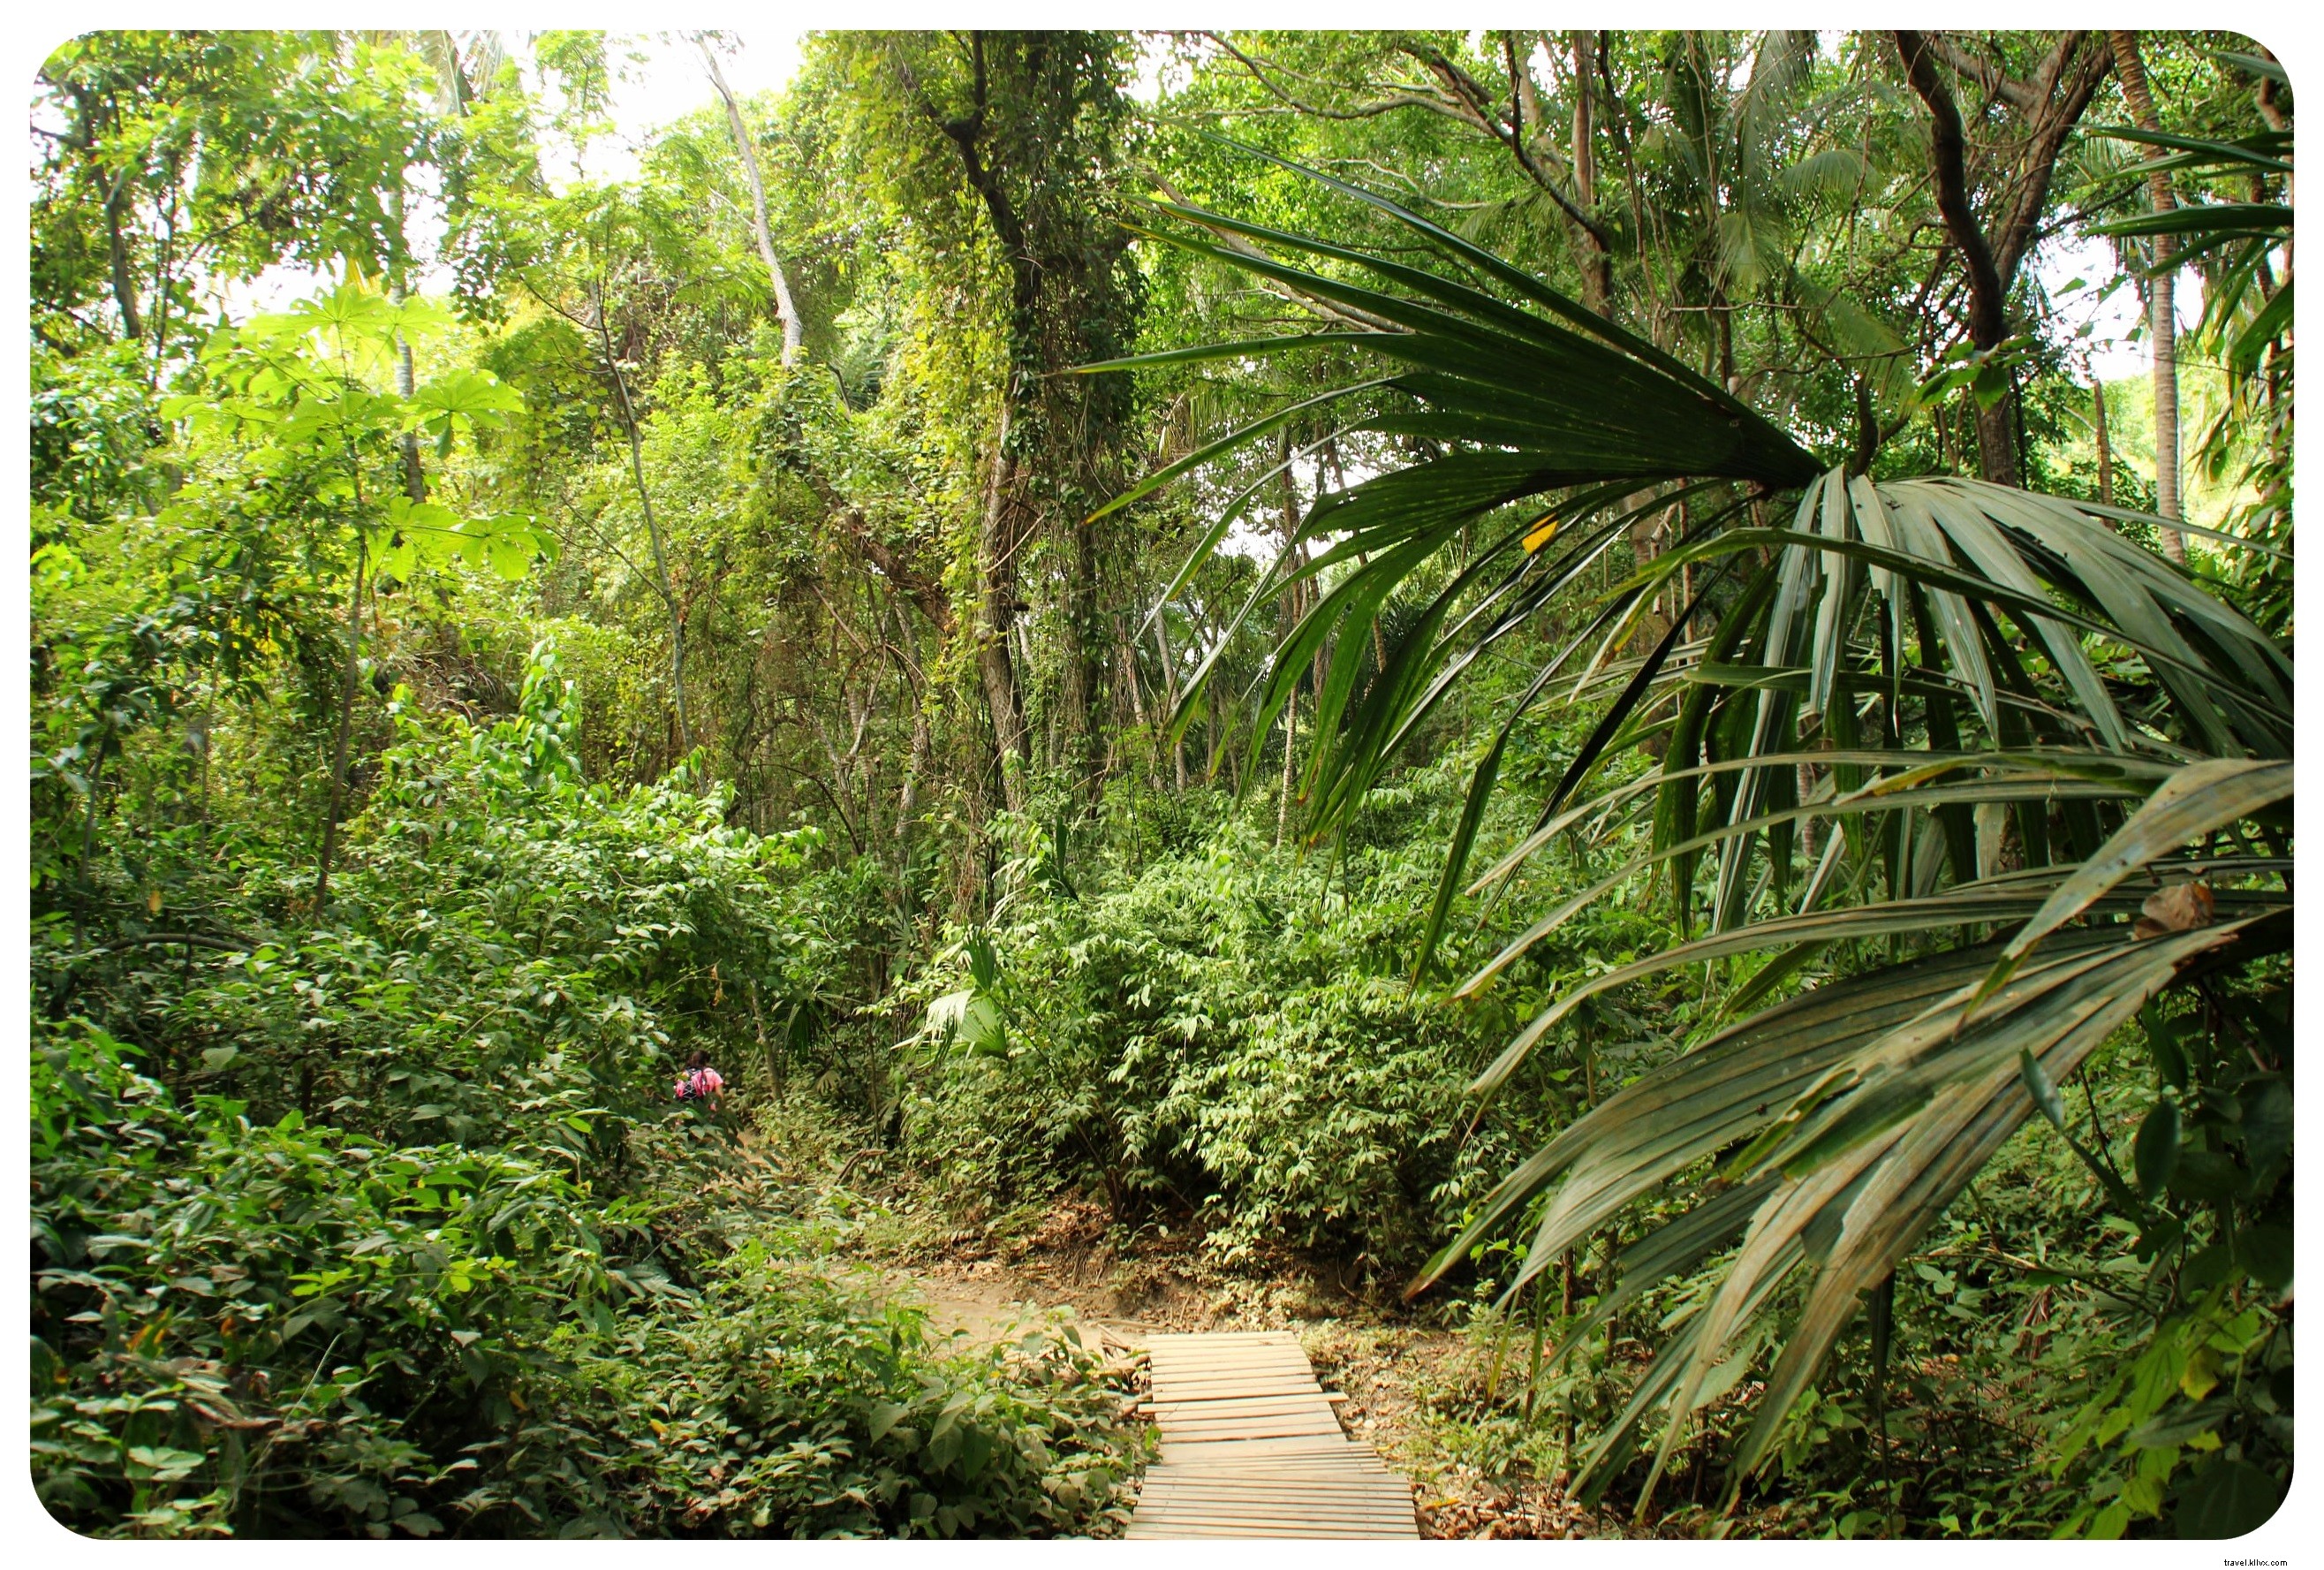 Tayrona, Colombie :là où la jungle rencontre la plage